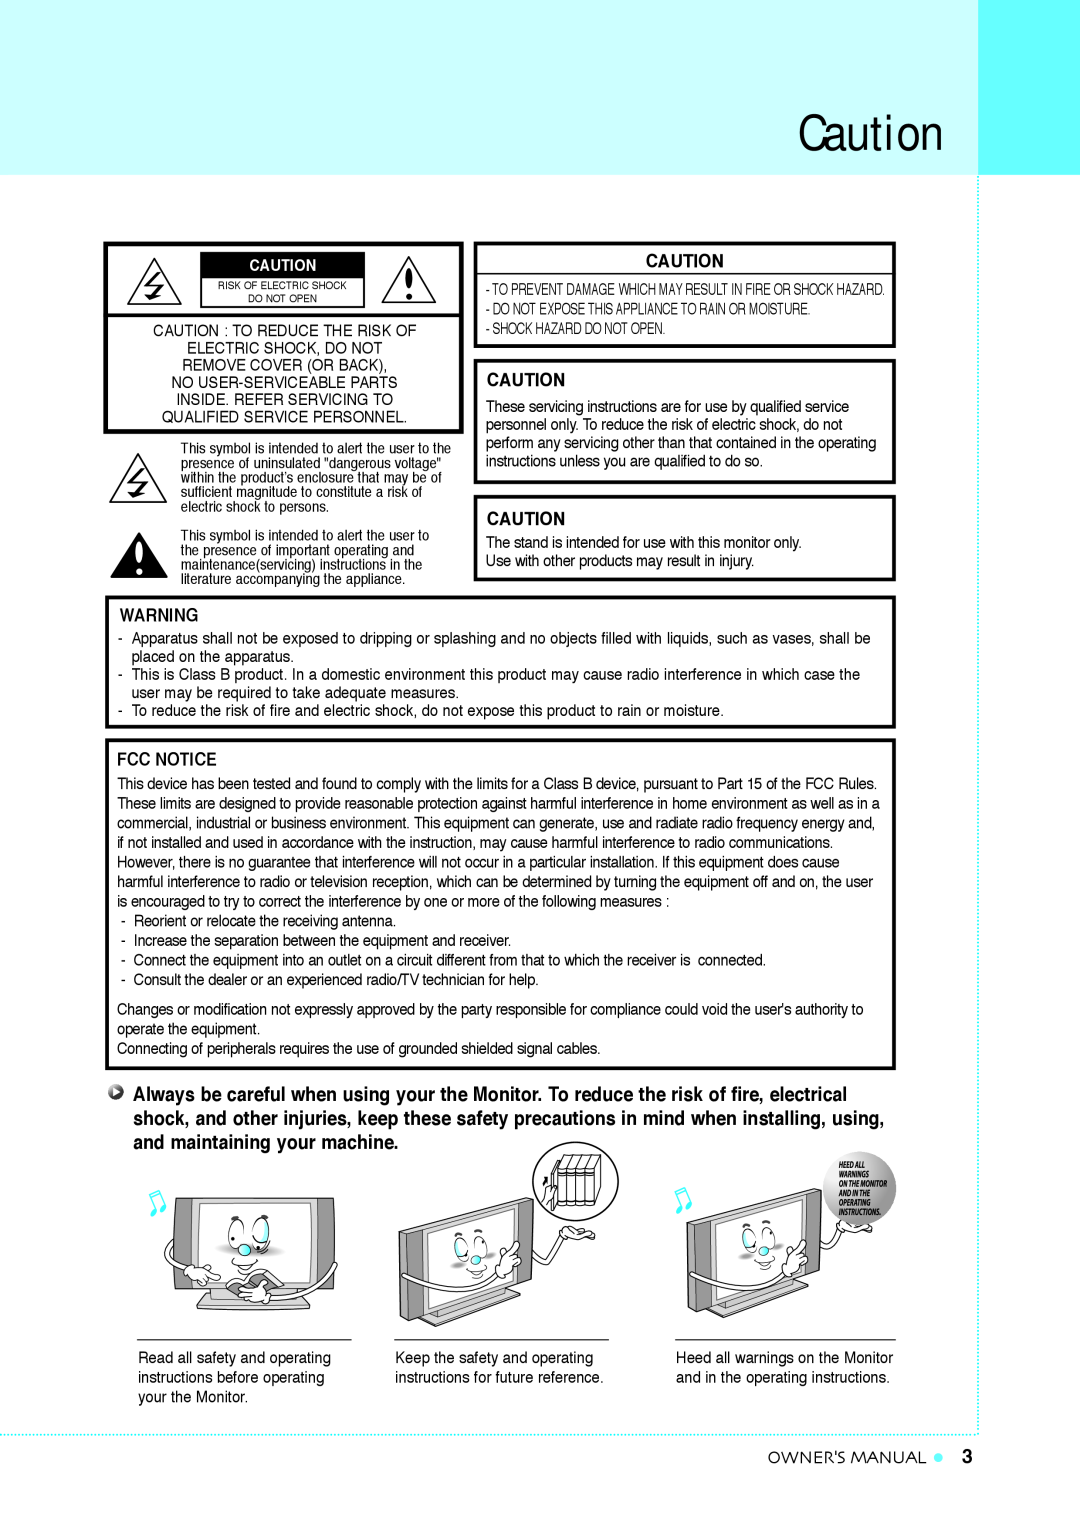 InFocus TD40 PAL manual Fcc Notice, Owners Manual 